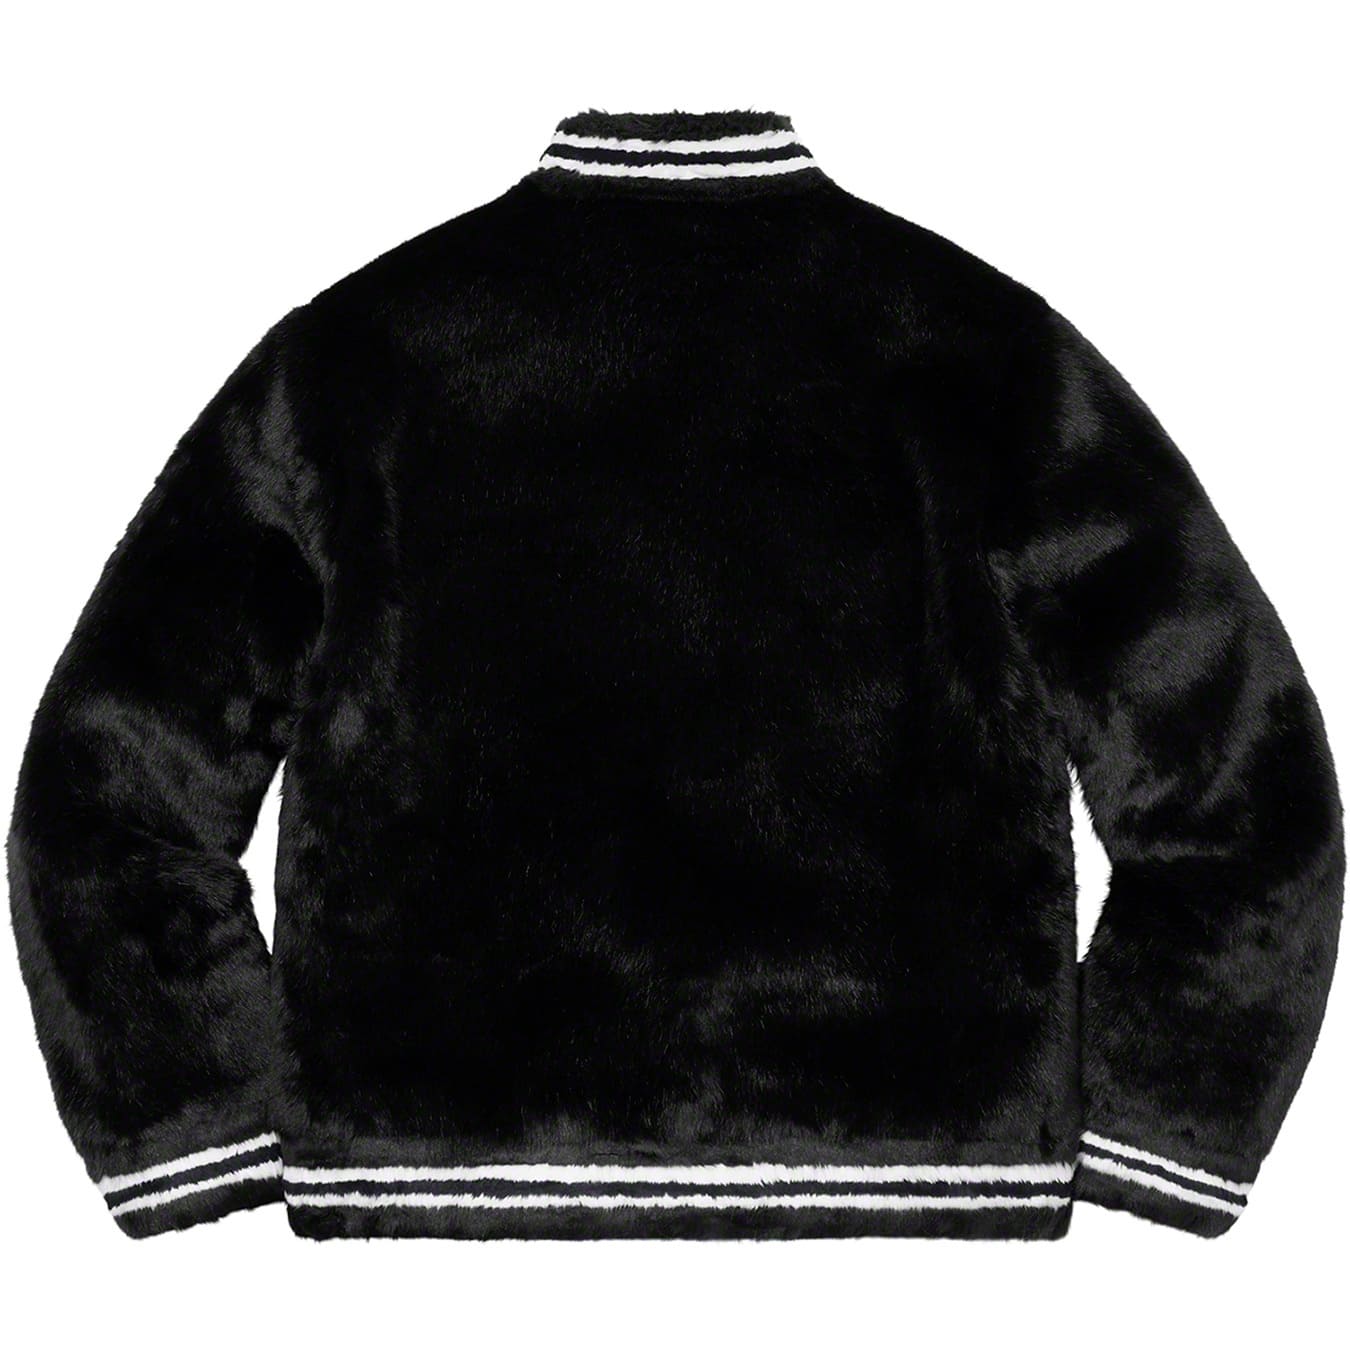 Supreme Faux Fur Varsity Jacket